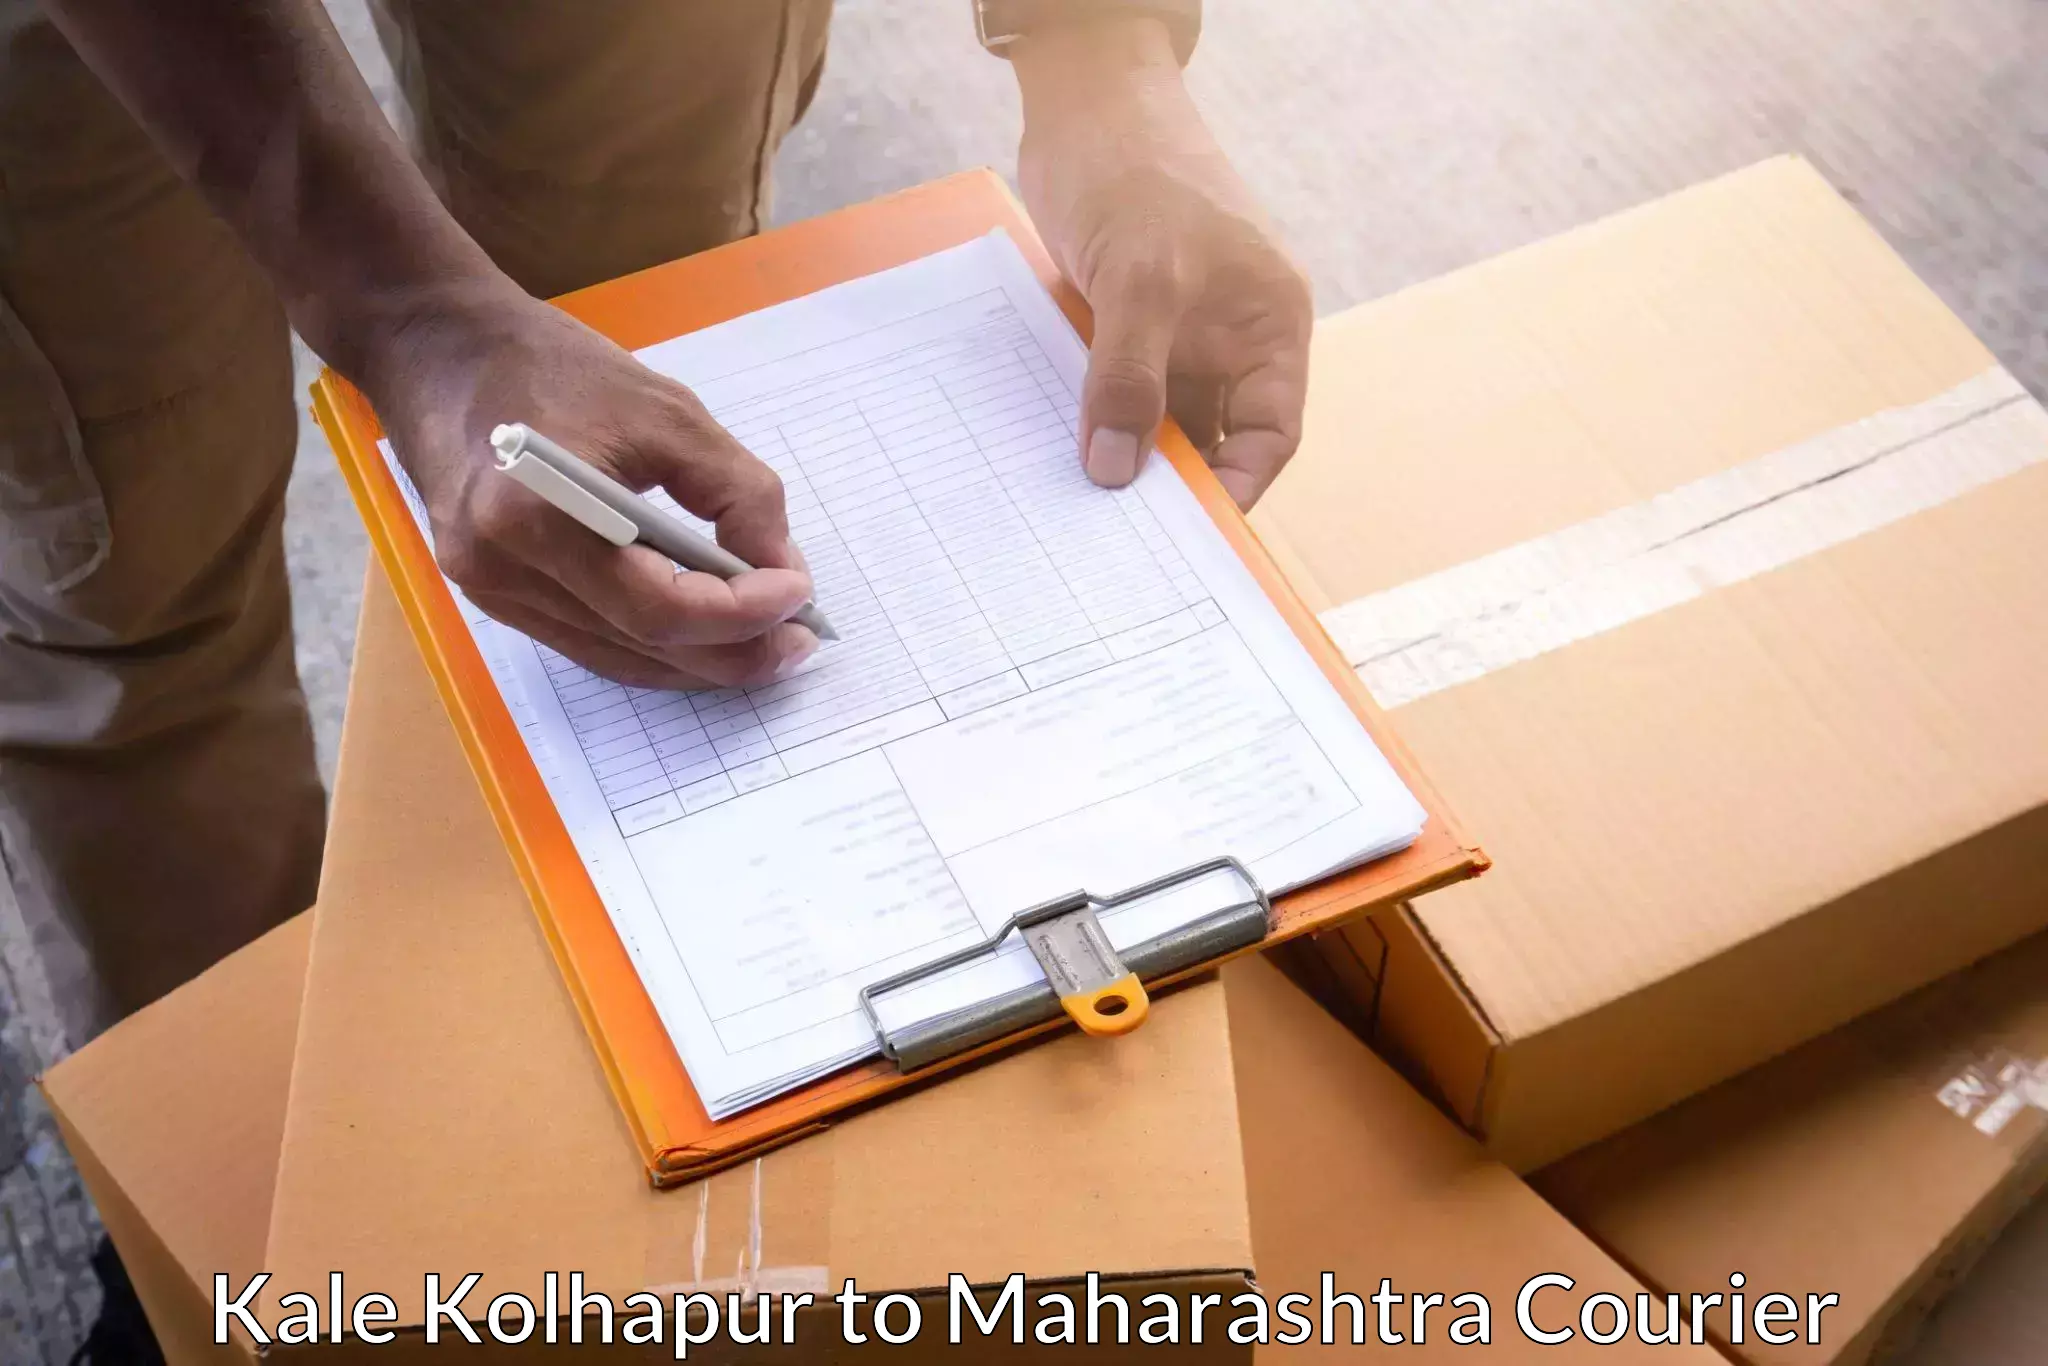 Cash on delivery service Kale Kolhapur to Maharashtra